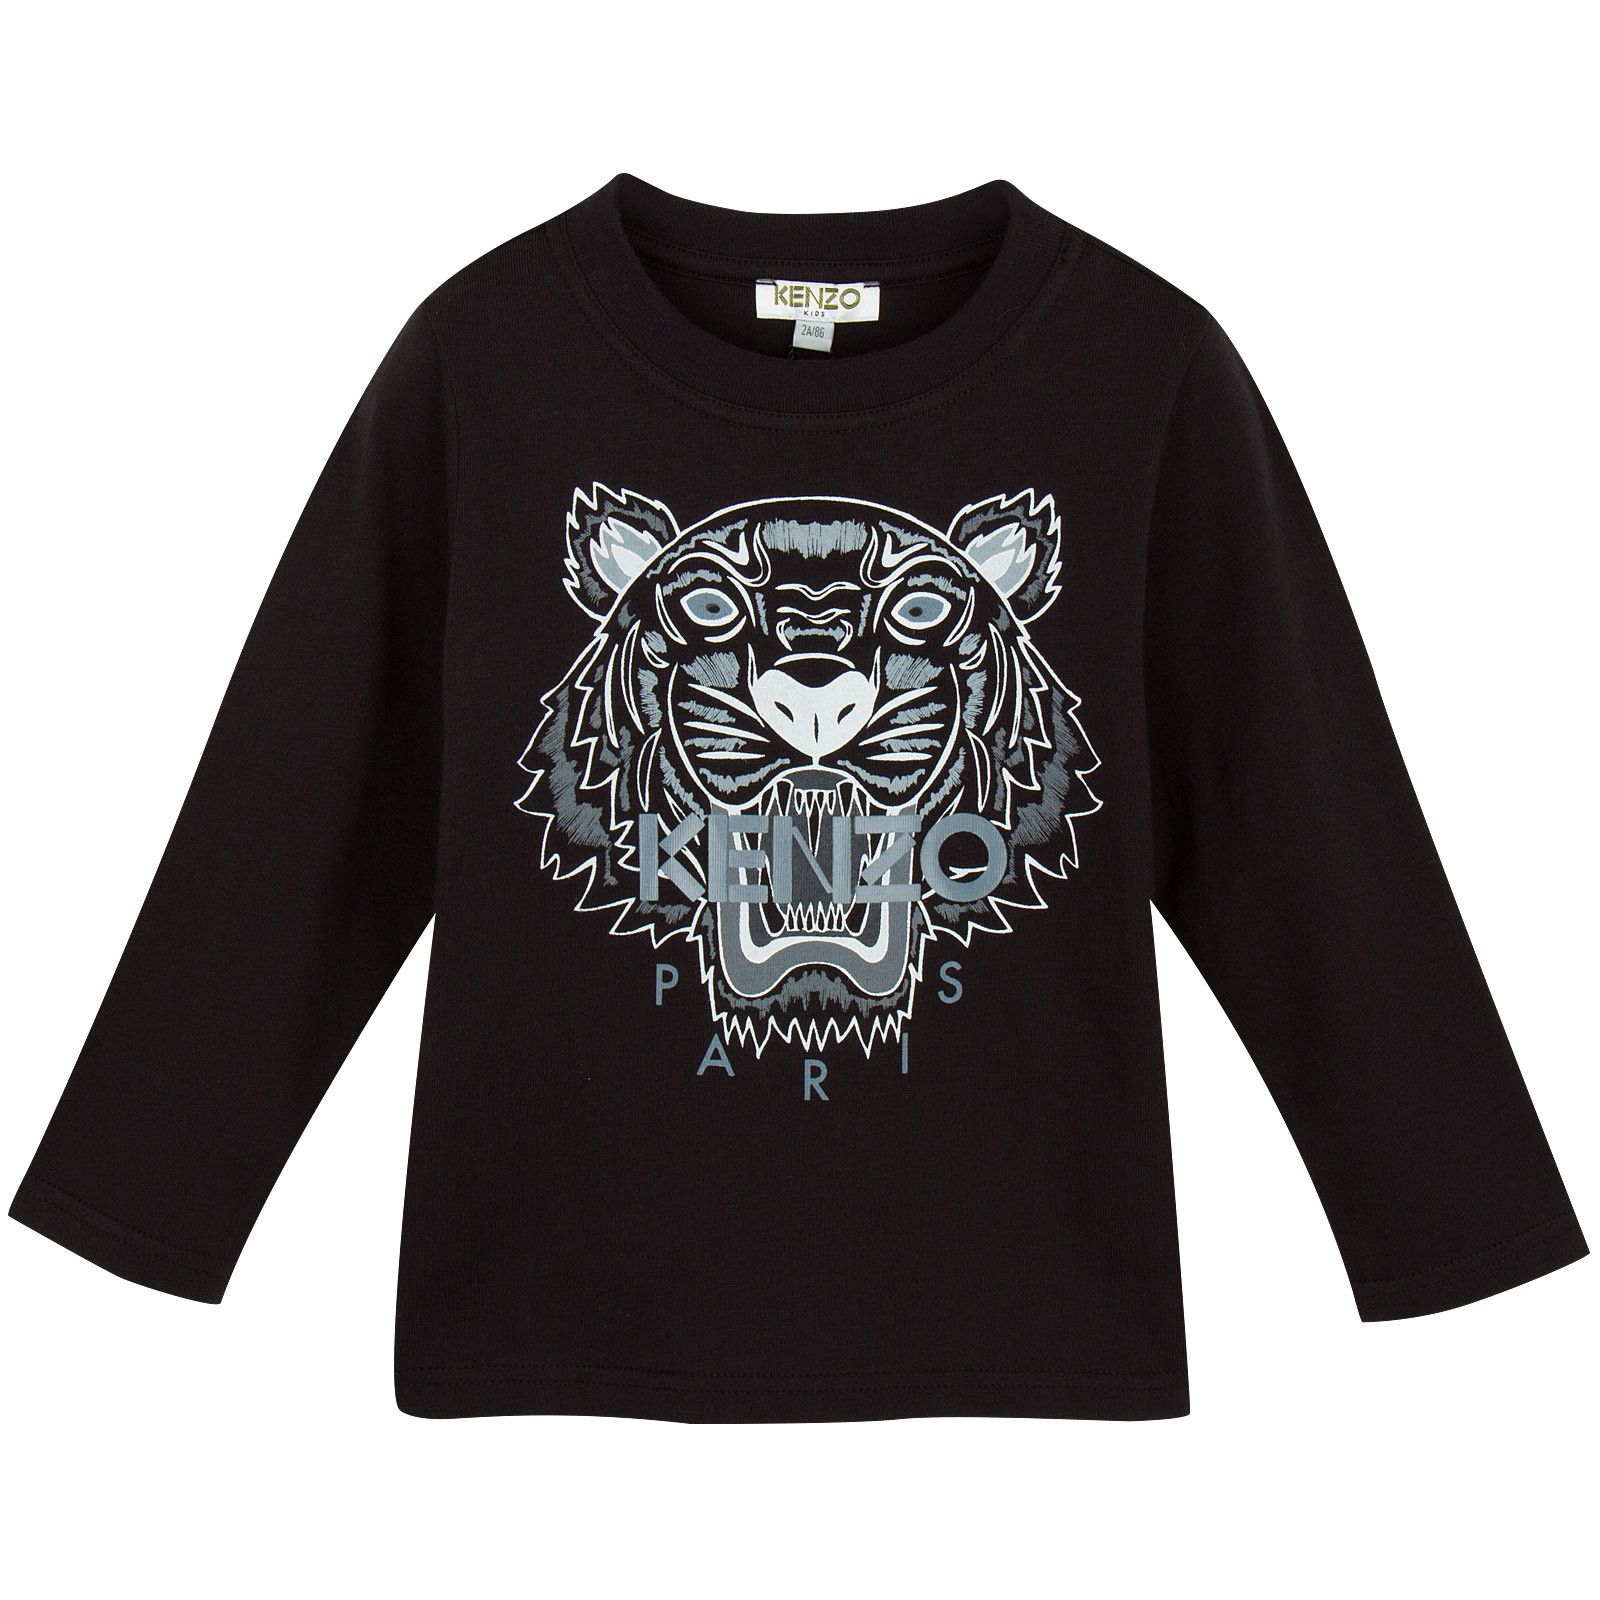 Boys Black Tiger Embroidered Cotton Jersey T-Shirt - CÉMAROSE | Children's Fashion Store - 1